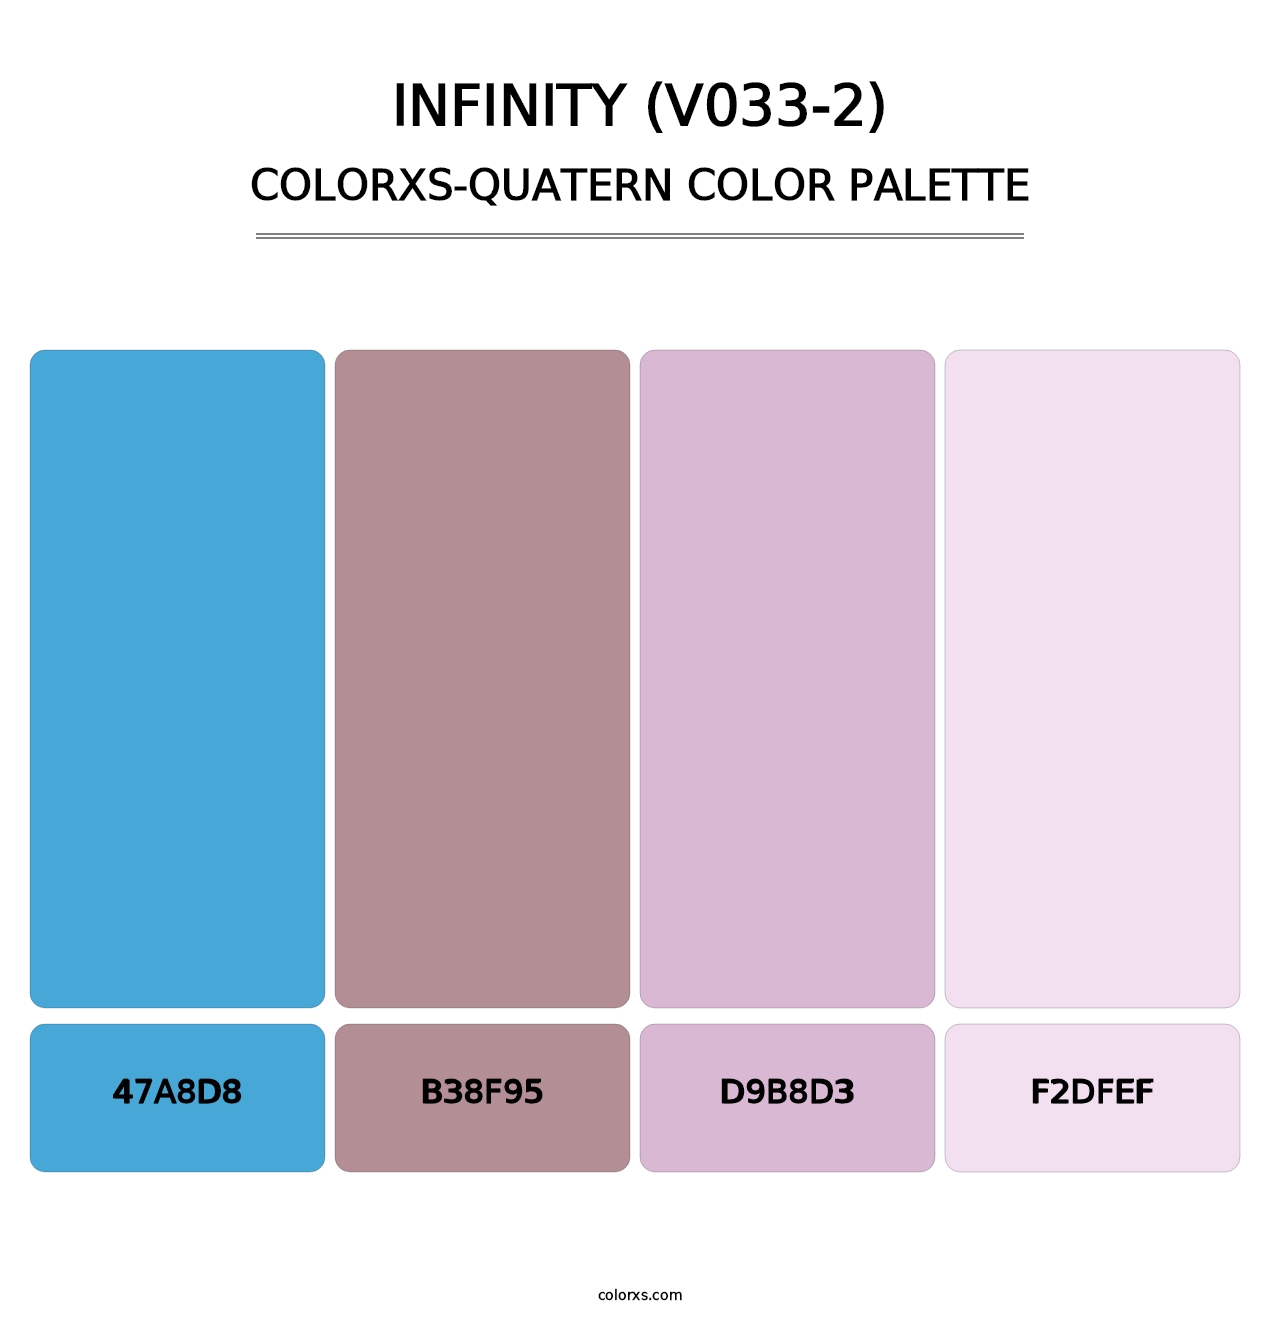 Infinity (V033-2) - Colorxs Quatern Palette